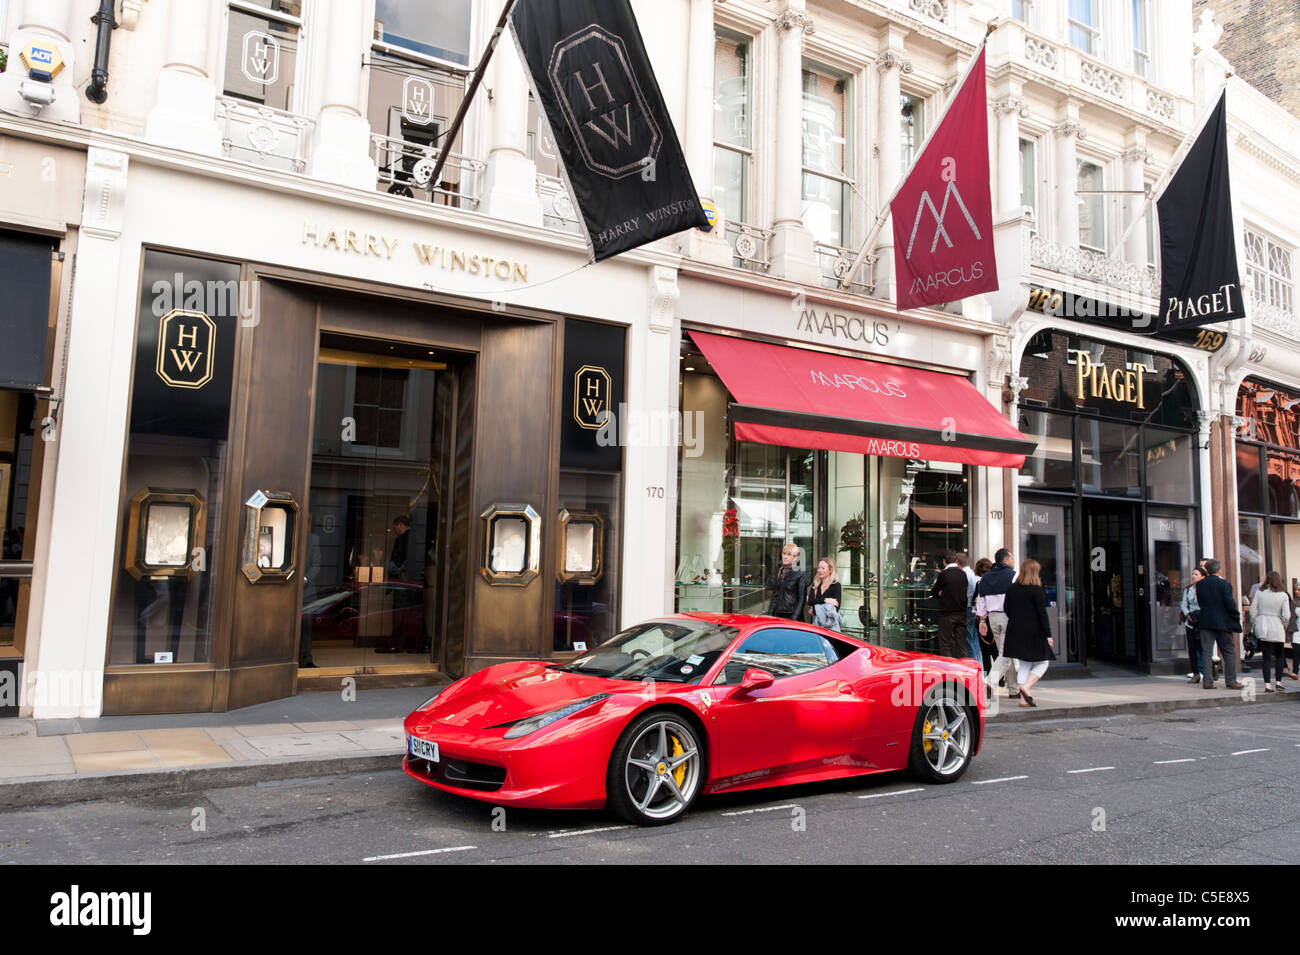 Red Ferrari car parked on New Bond Street, London, UK Stock Photo